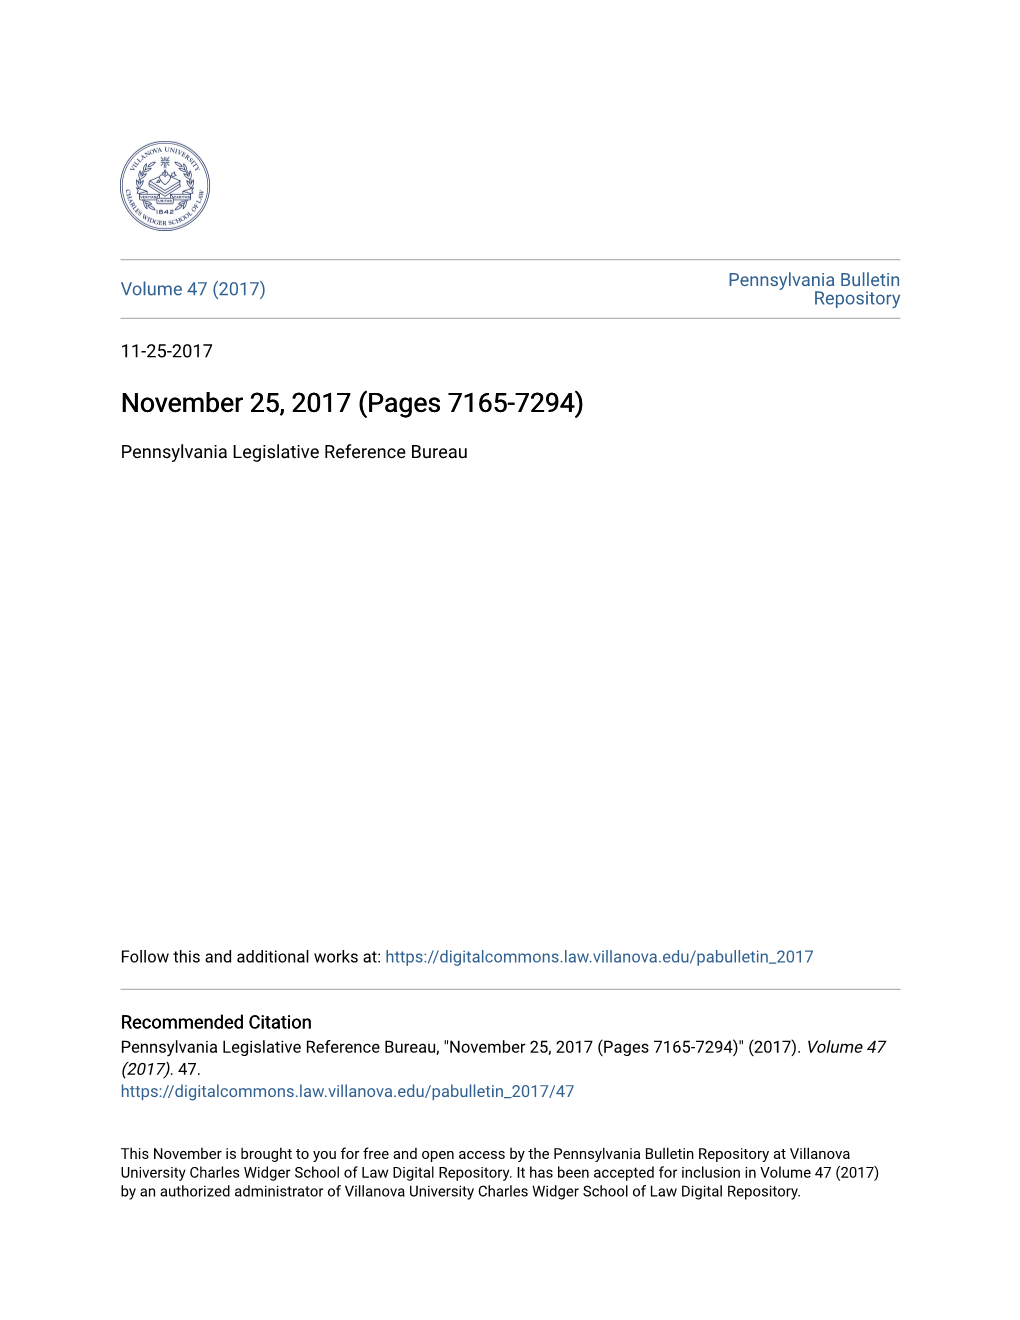 Pennsylvania Bulletin Volume 47 (2017) Repository